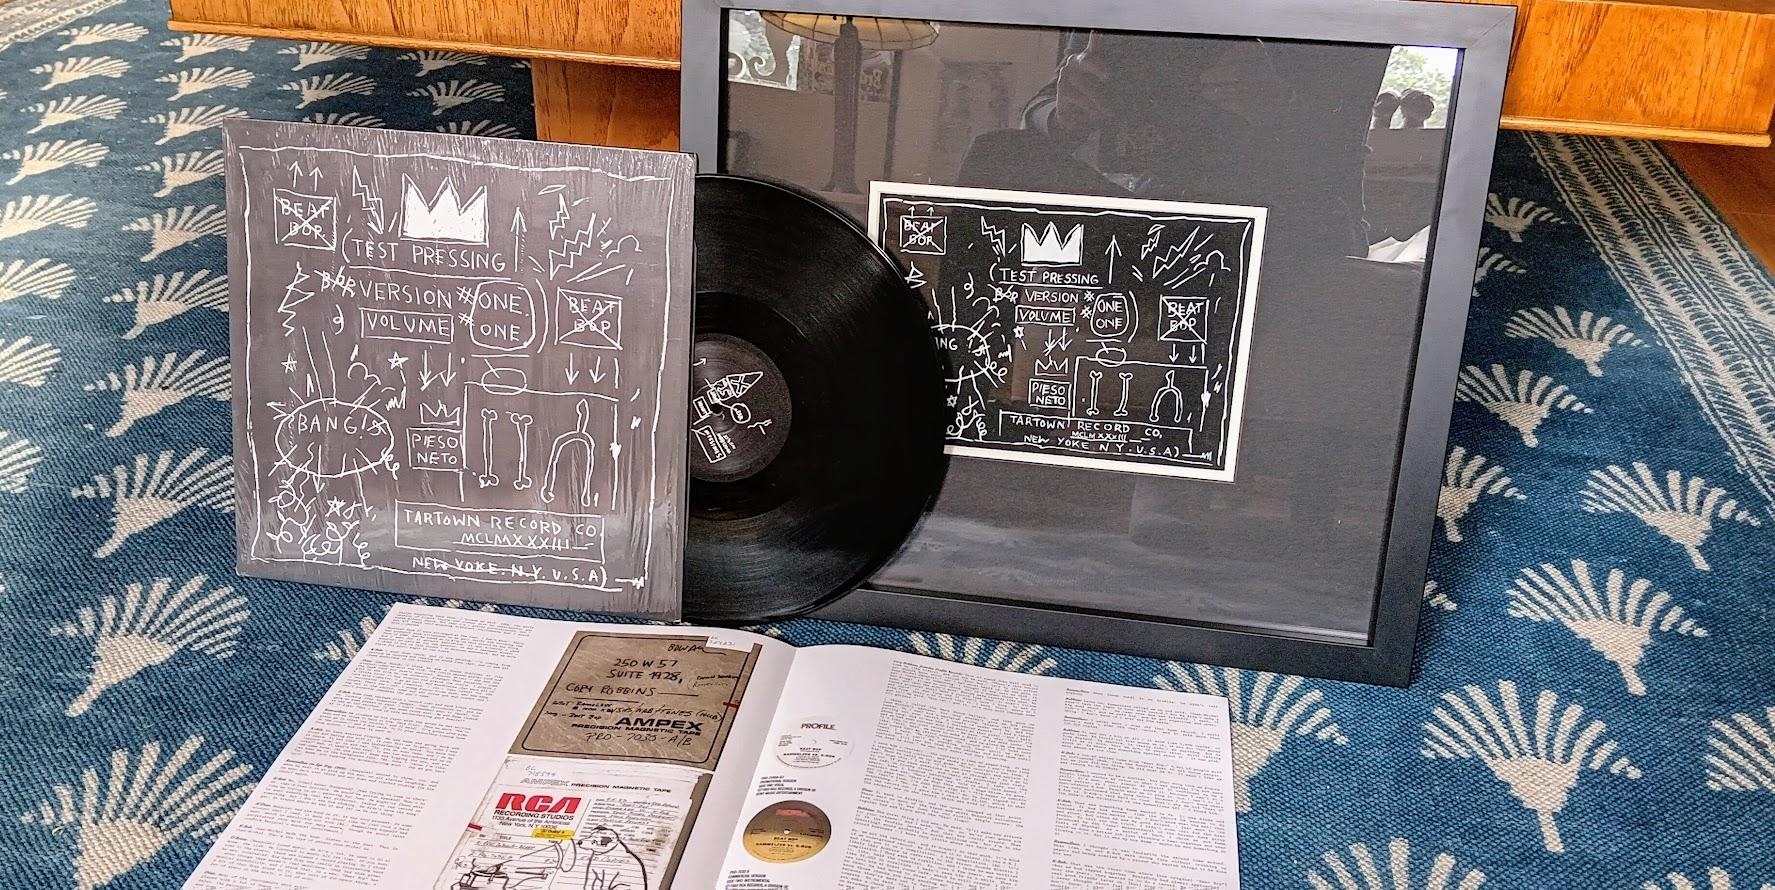 Rammelzee & Jean Michel Basquiat "Beat Bop", Mixed Media w/ 12' Vinyl Record  - Mixed Media Art de after Jean-Michel Basquiat